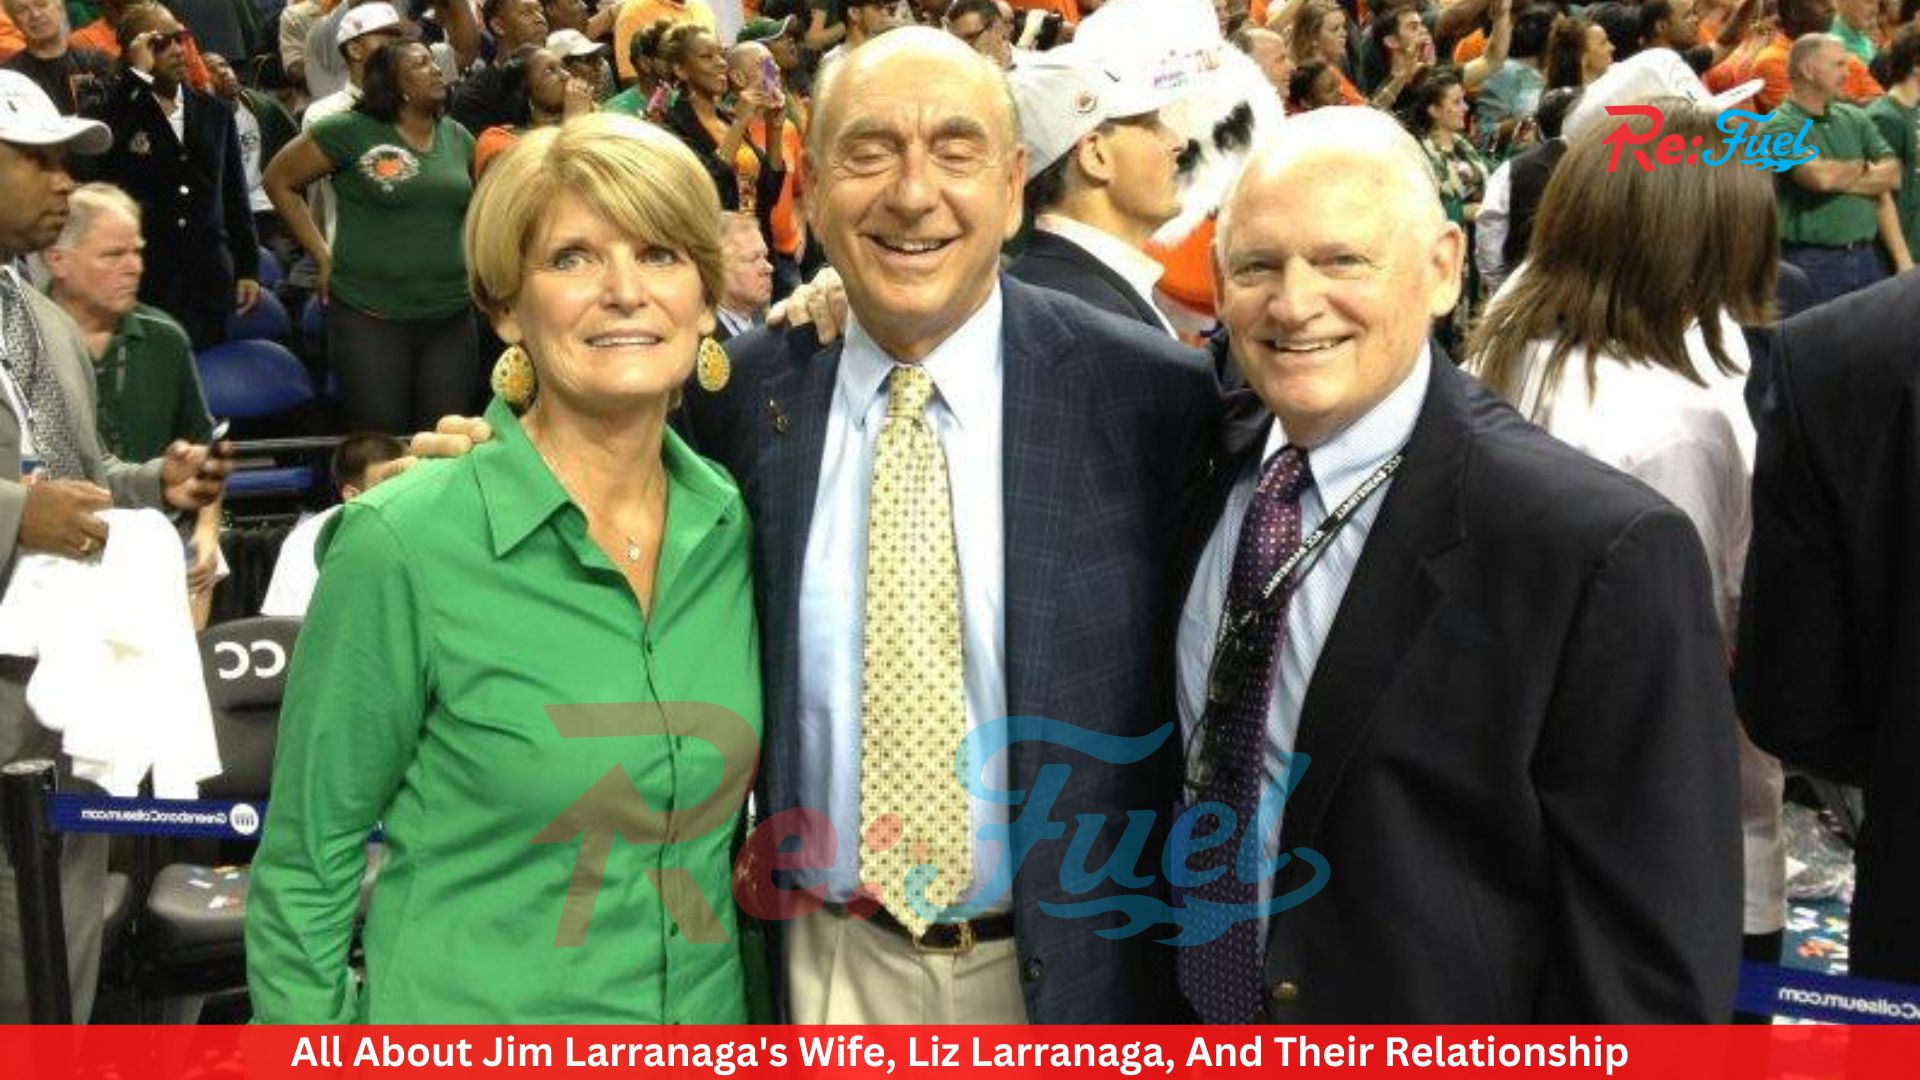 All About Jim Larranaga's Wife, Liz Larranaga, And Their Relationship